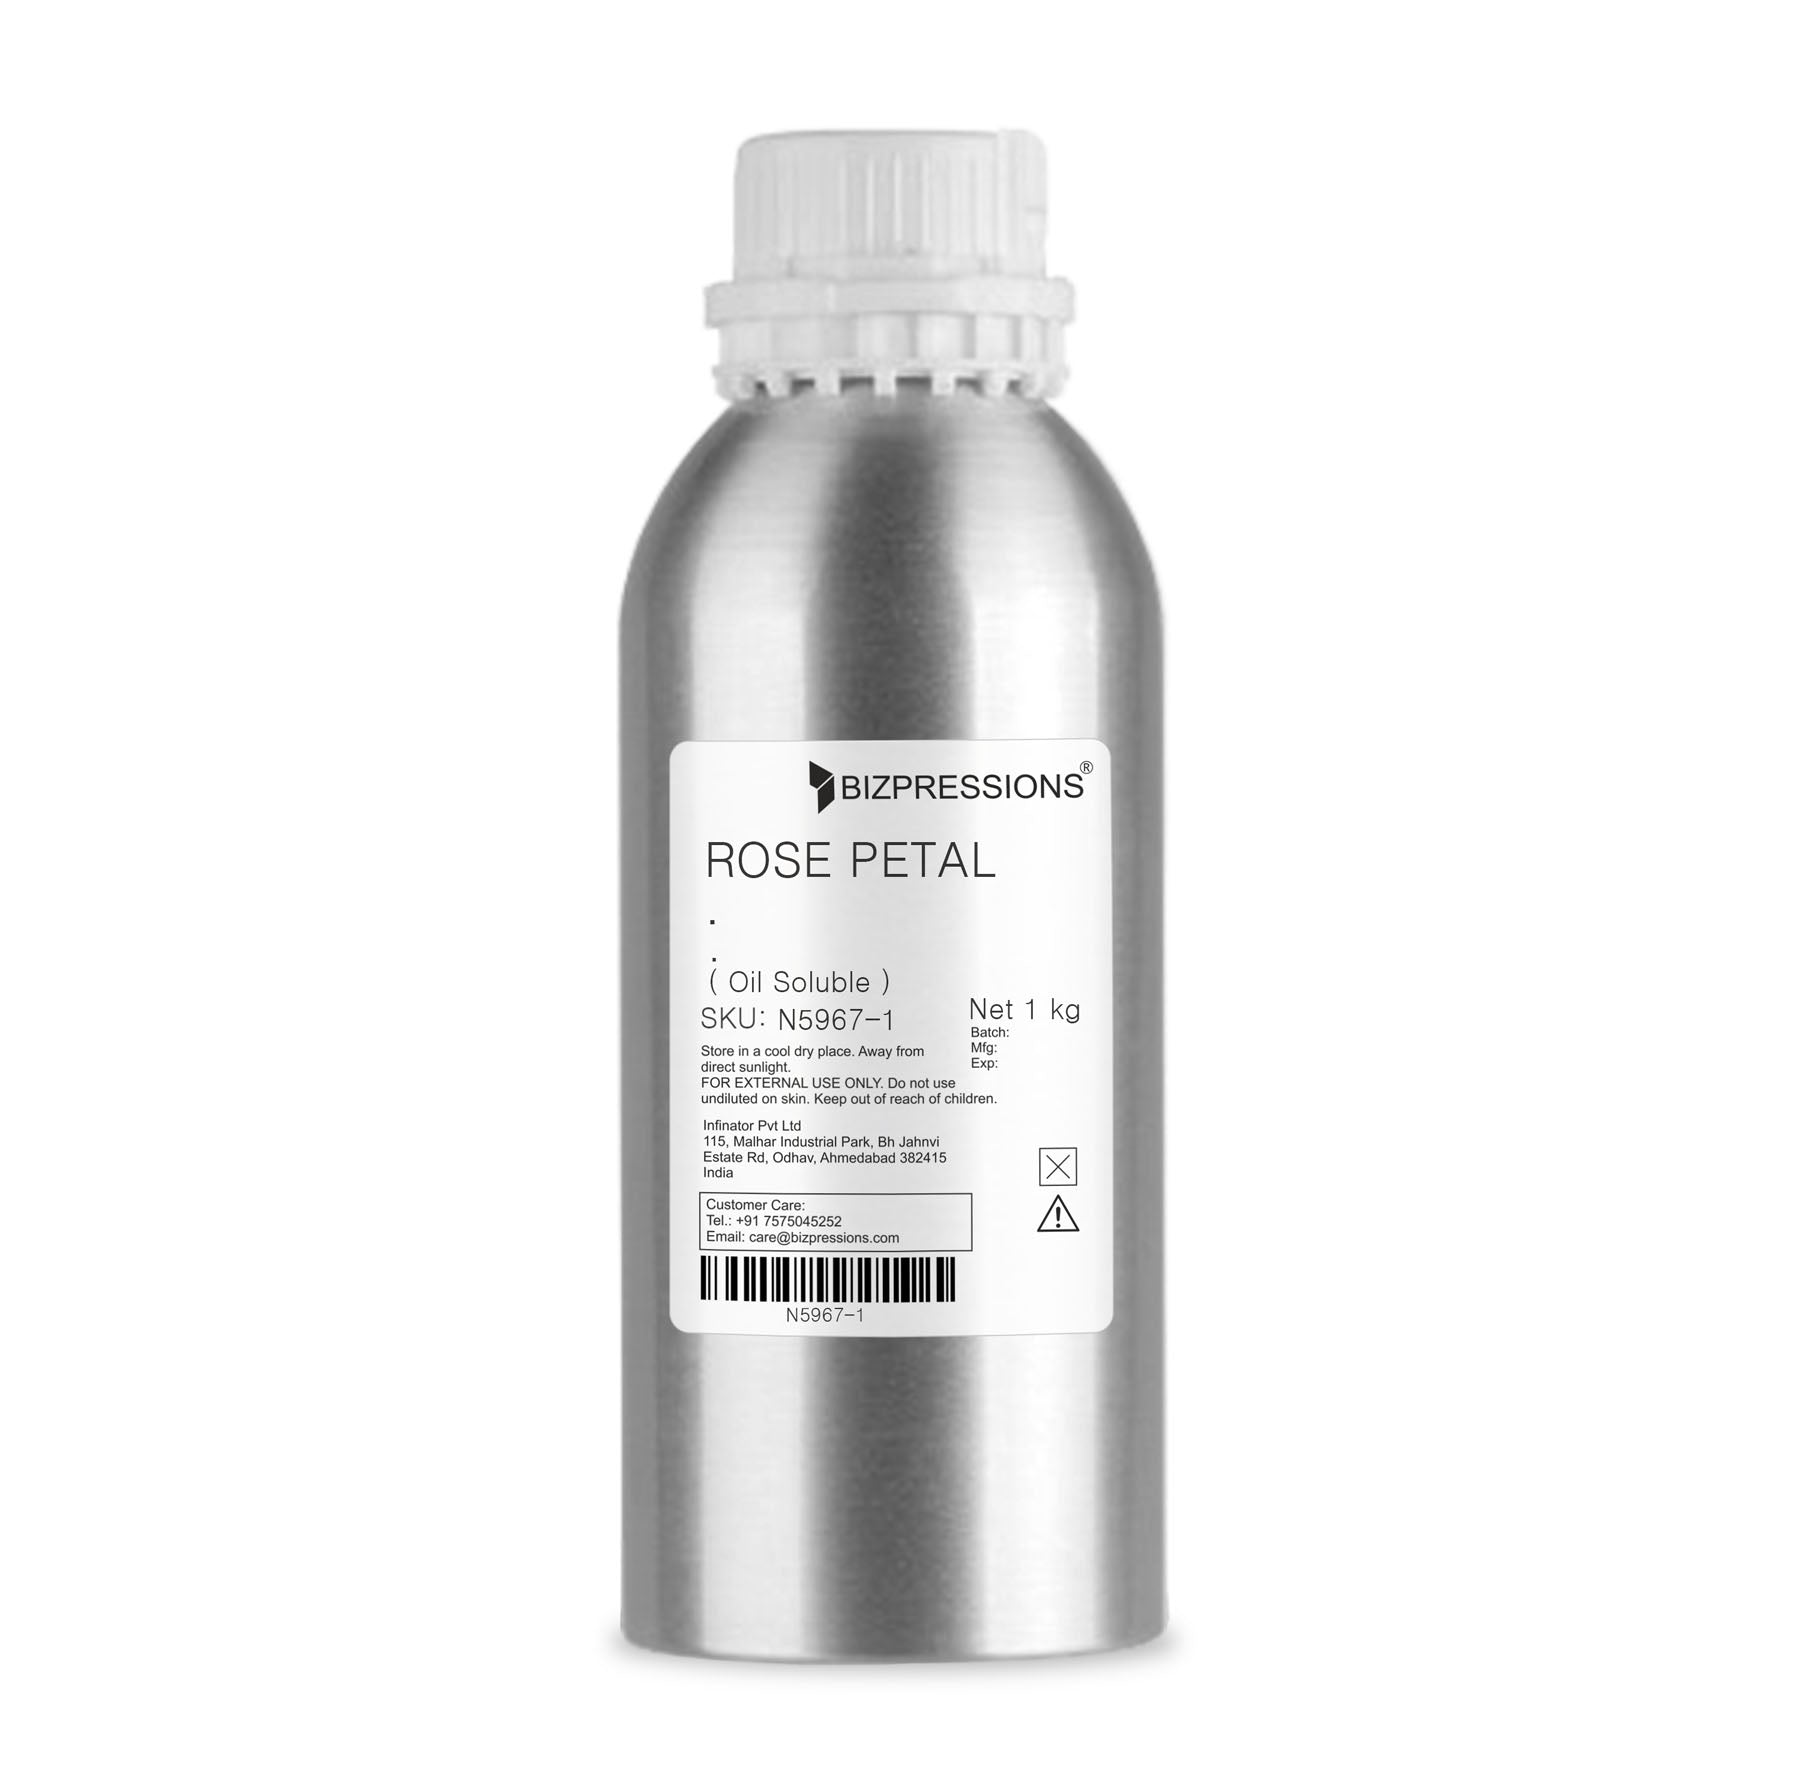 ROSE PETAL - Fragrance ( Oil Soluble ) - 1 kg